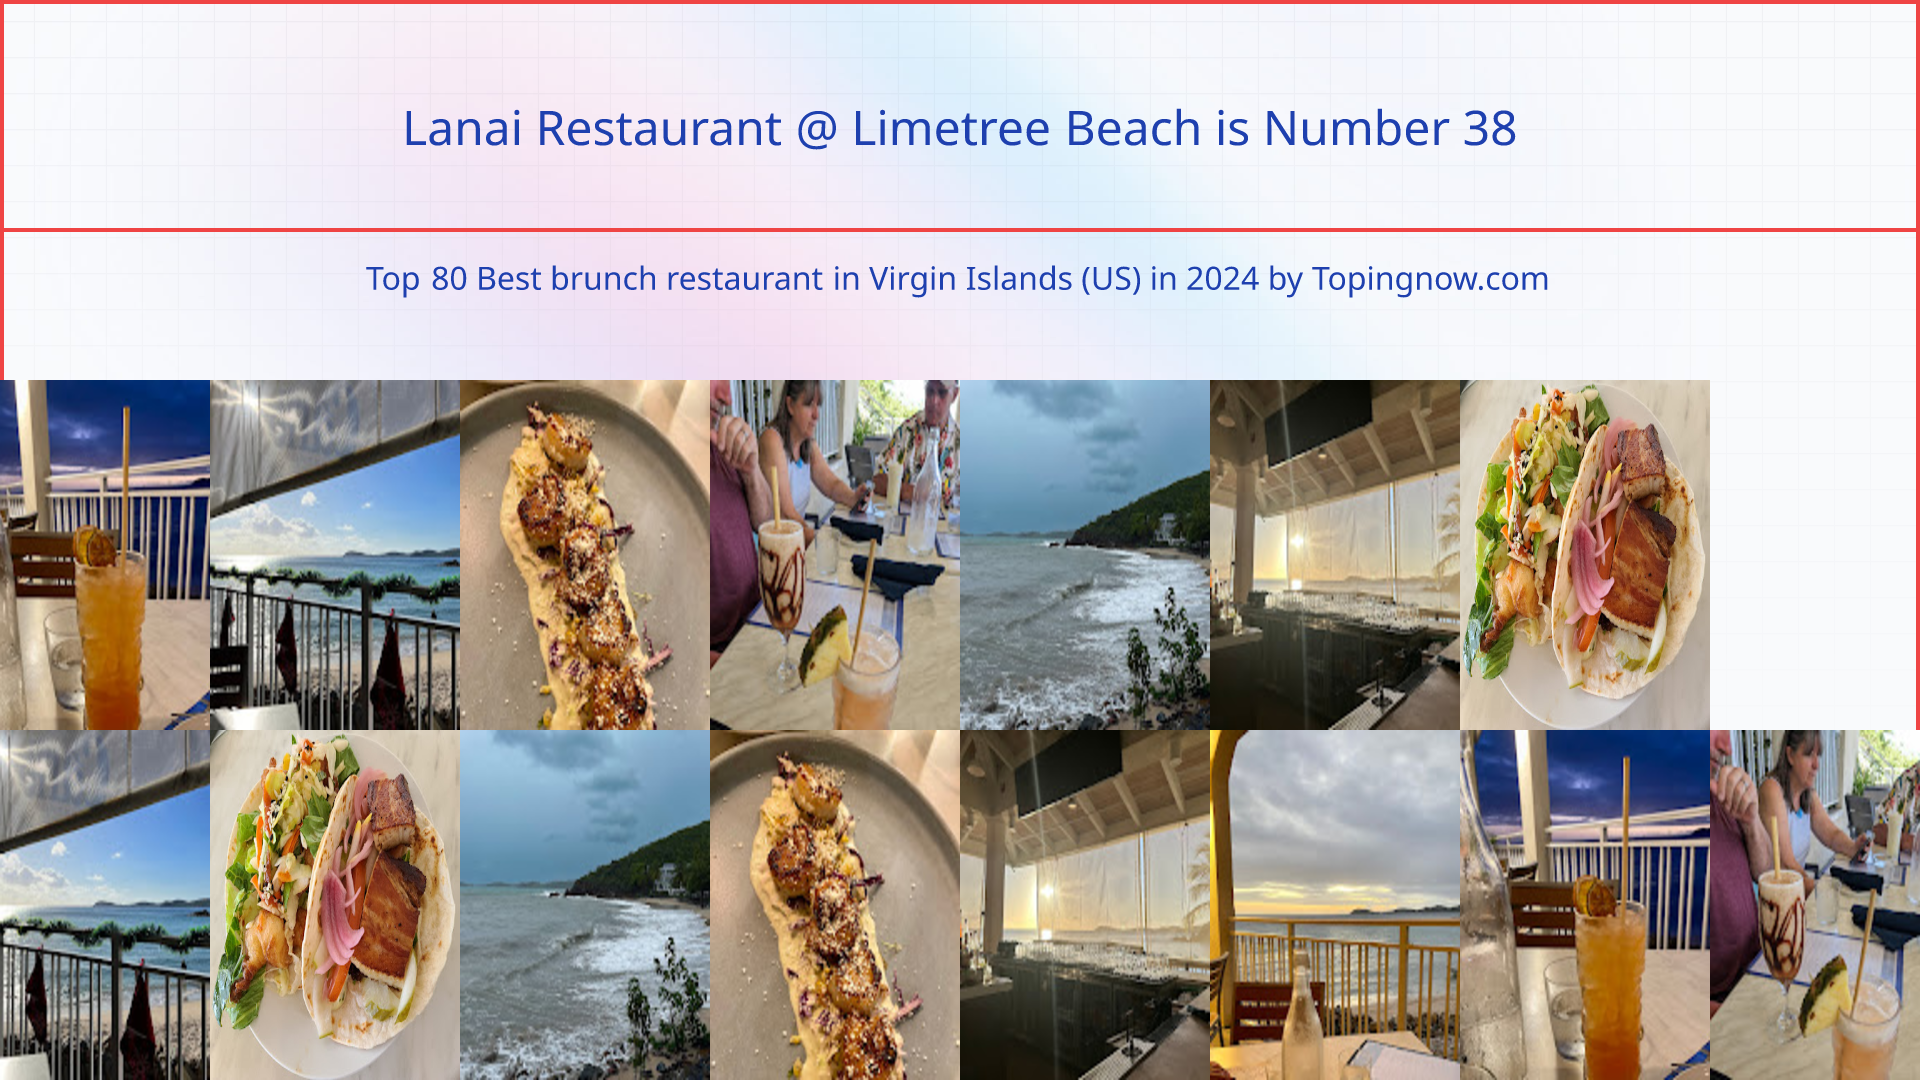 Lanai Restaurant @ Limetree Beach: Top 80 Best brunch restaurant in Virgin Islands (US) in 2024